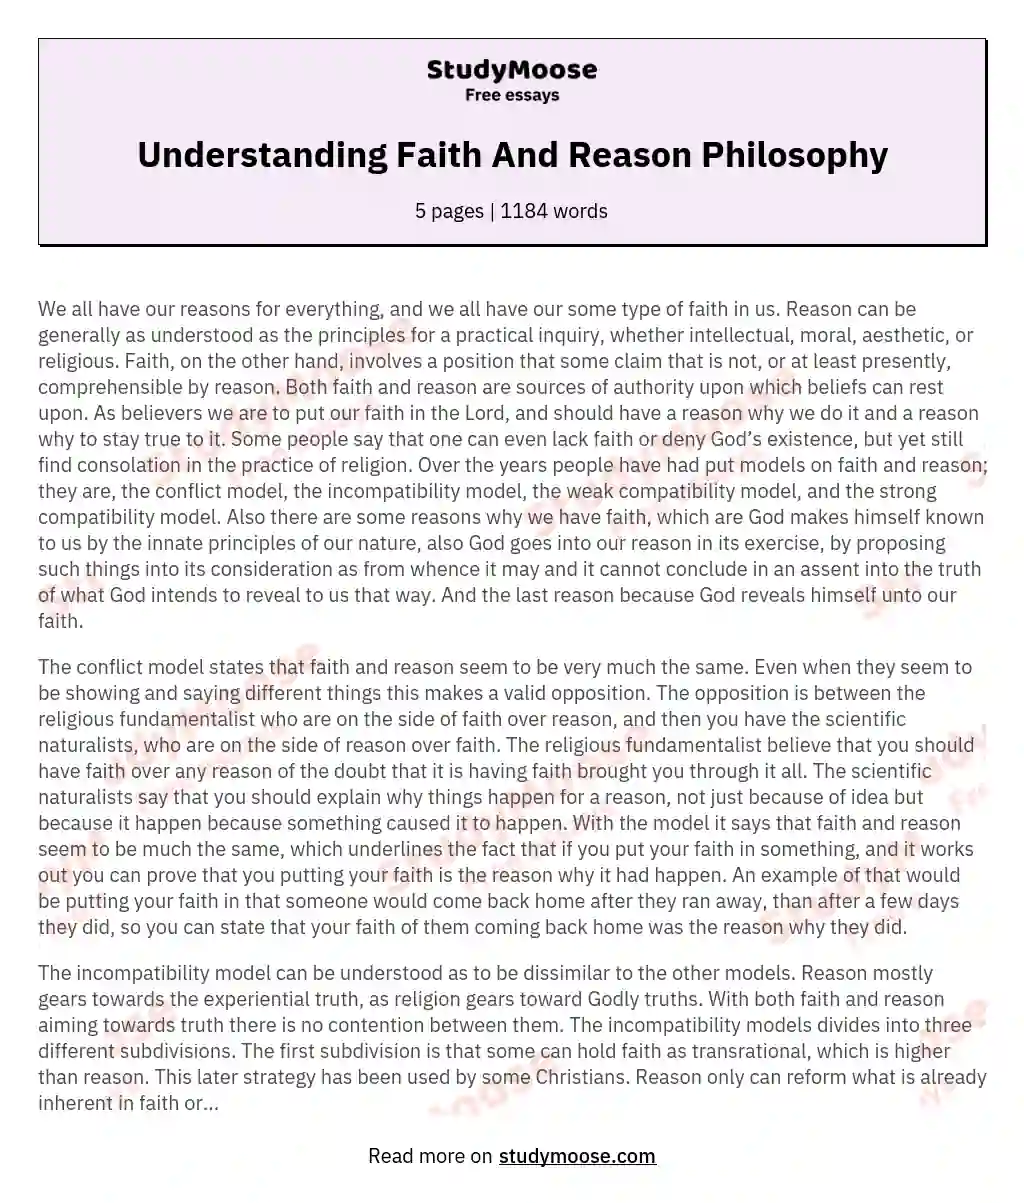 Understanding Faith And Reason Philosophy essay